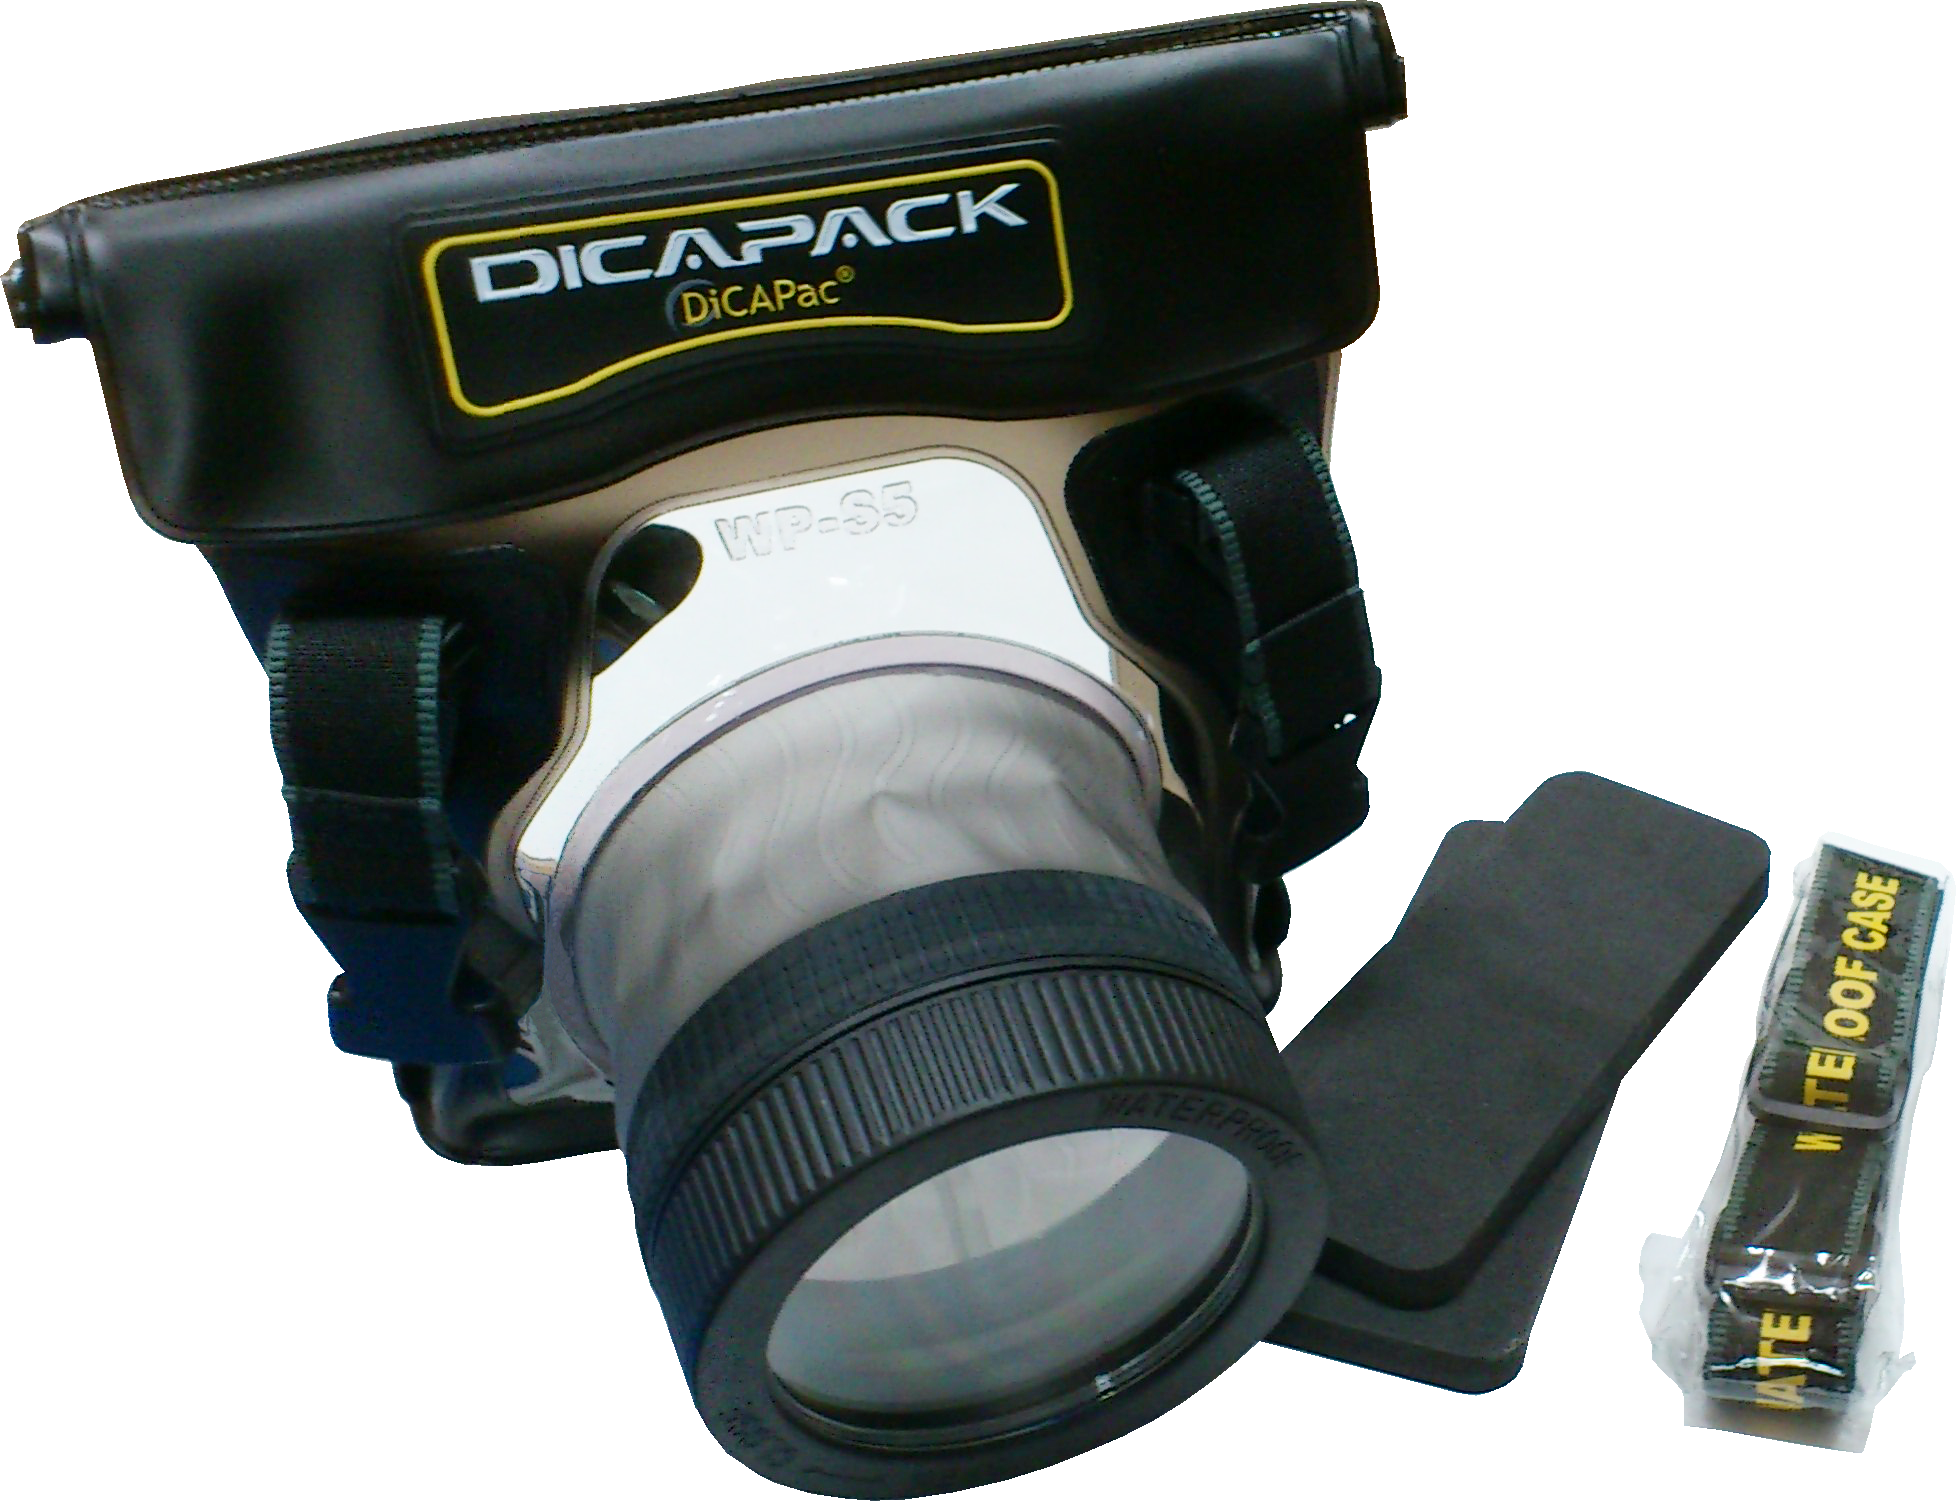 DiCAPac WP-S5 waterproof DSLR-Camera Case